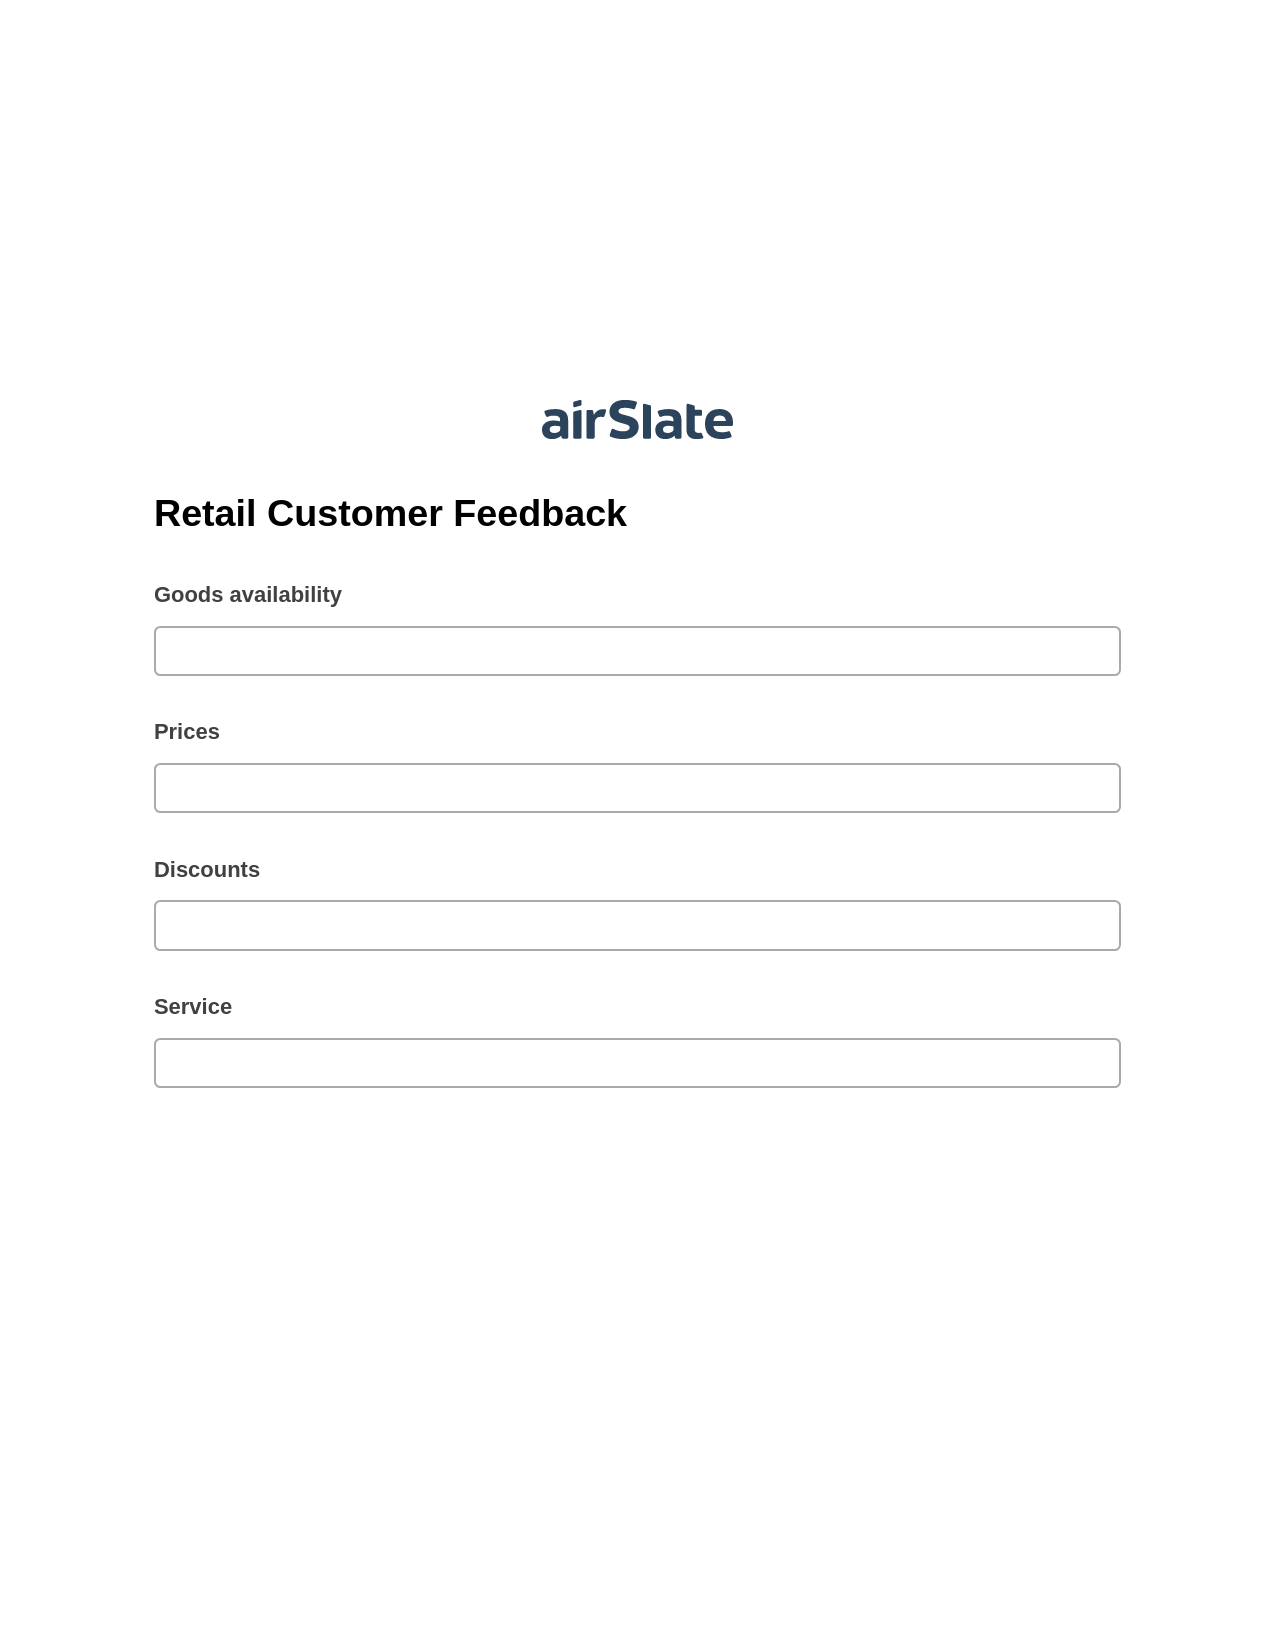 Retail Customer Feedback Pre-fill Dropdown from Airtable, SendGrid send Campaign bot, Box Bot